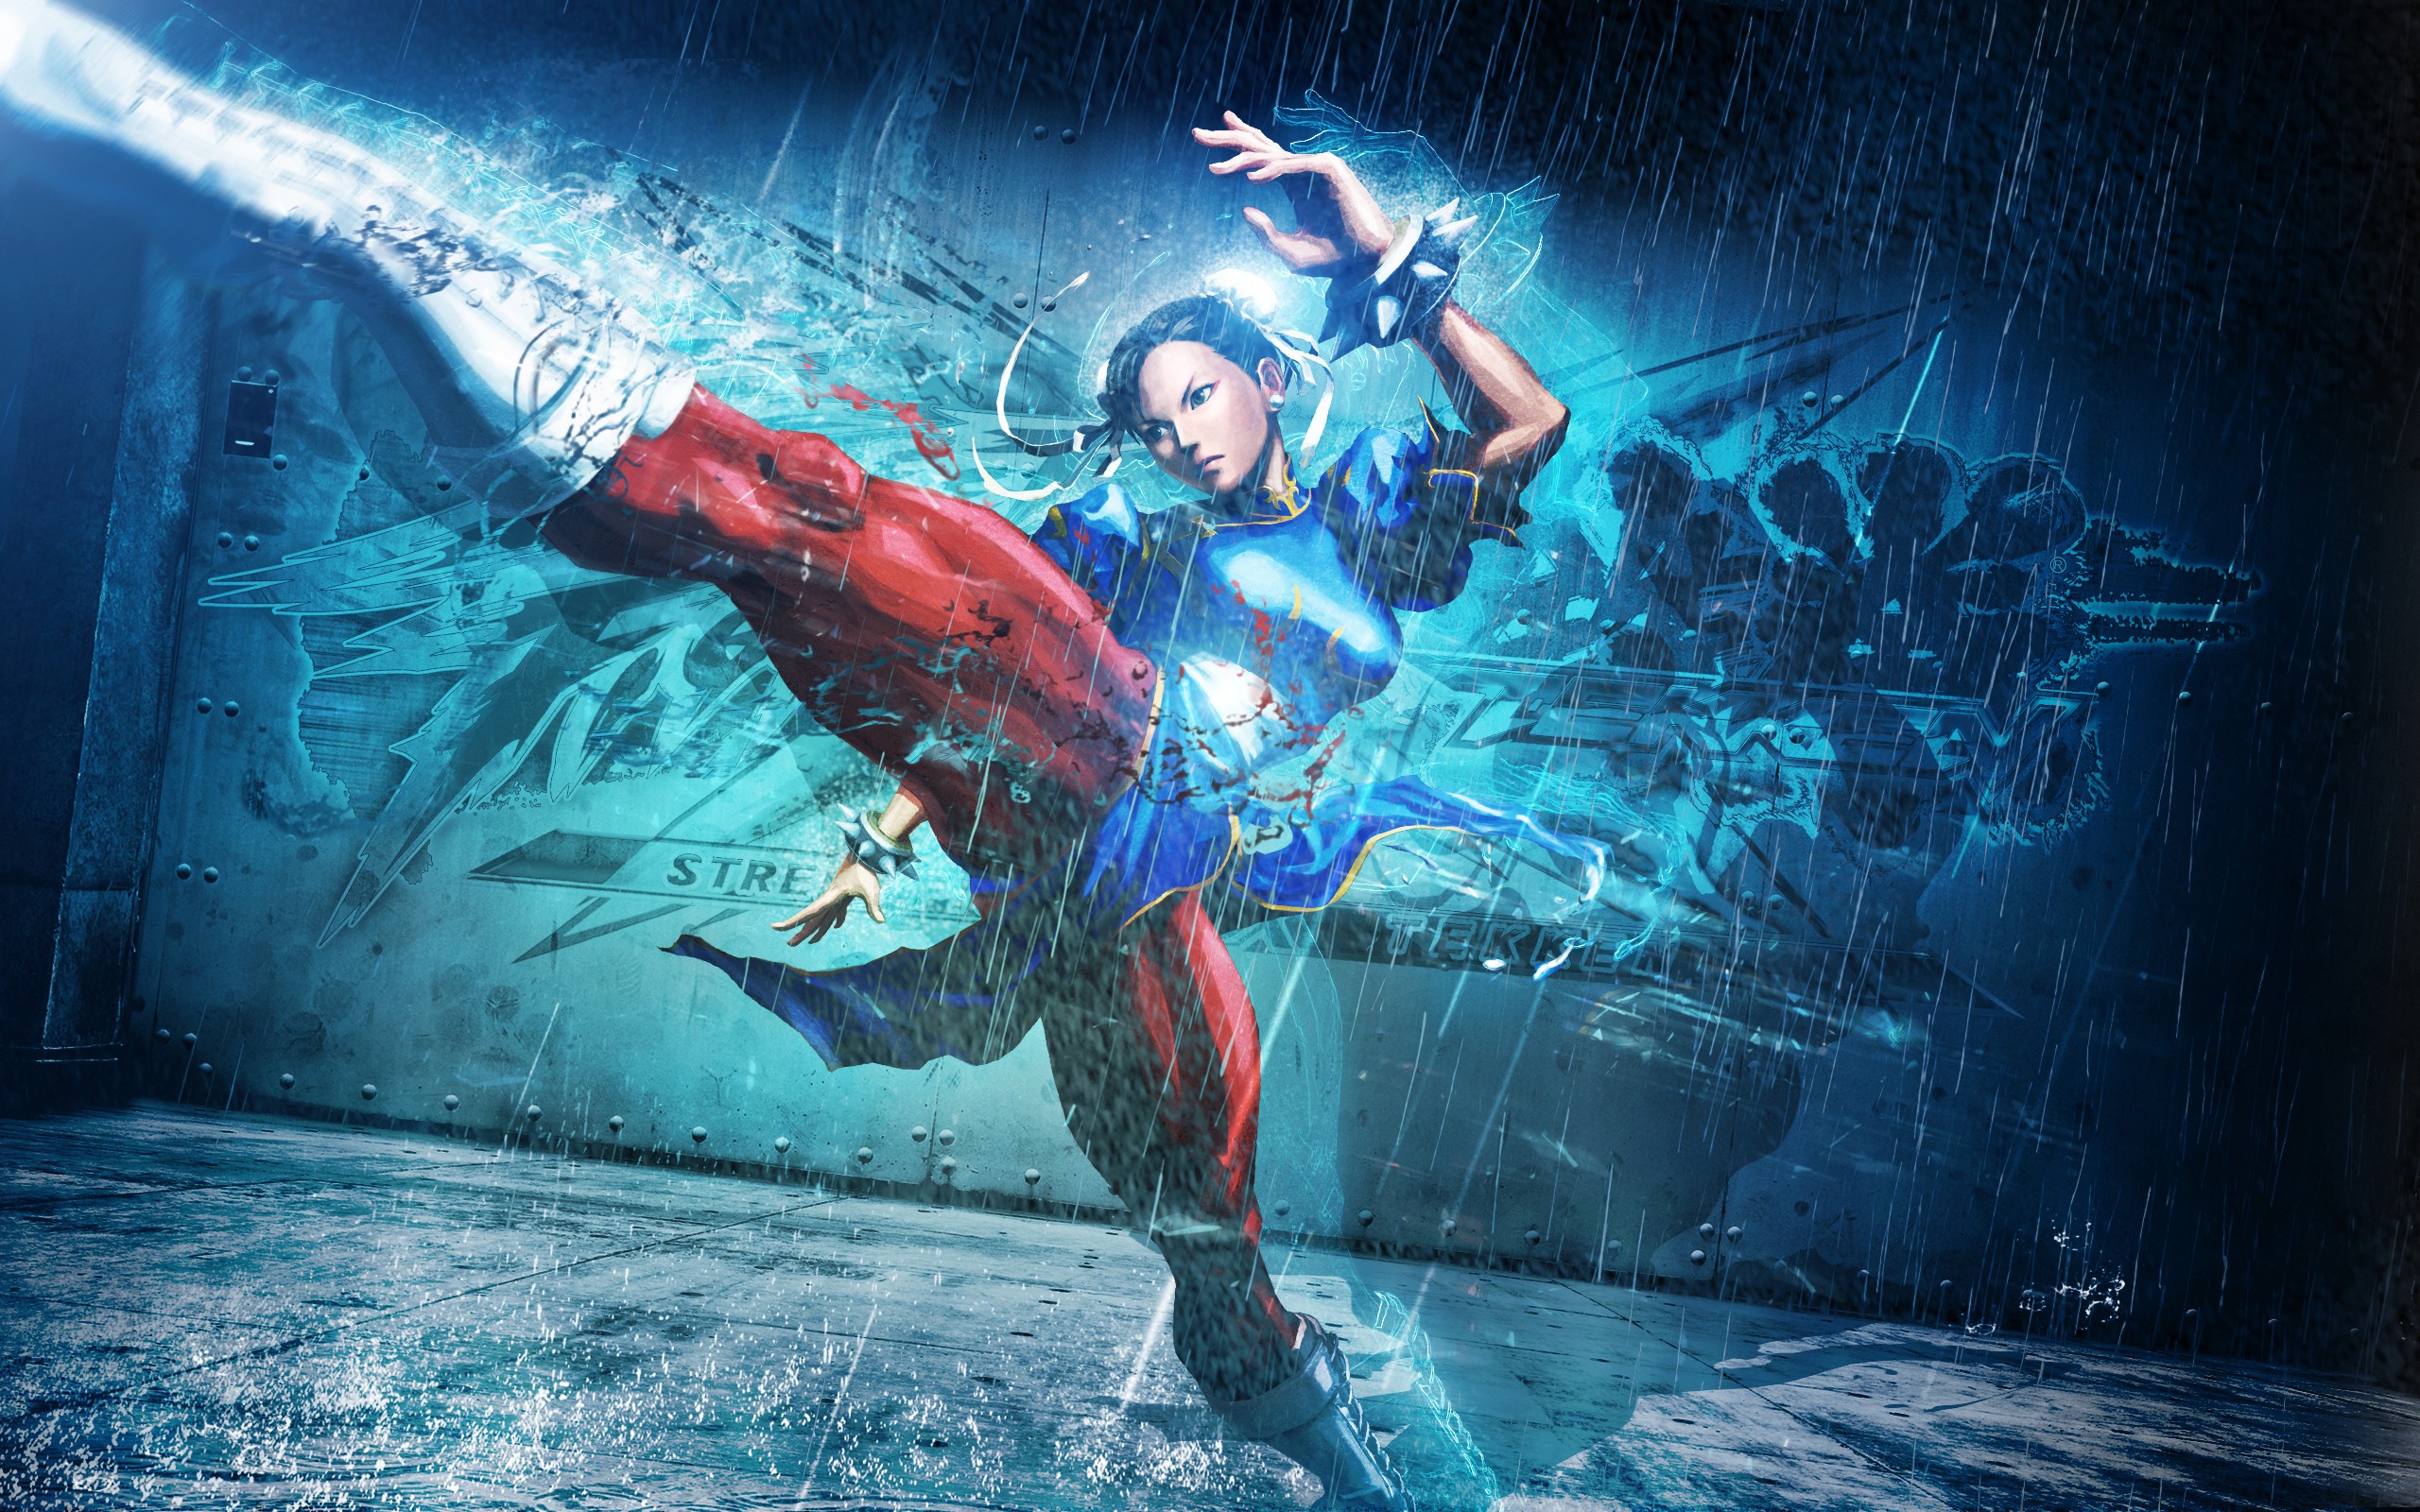 General 2560x1600 Chun-Li Street Fighter kick video game art cyan blue rain video game girls women video game warriors